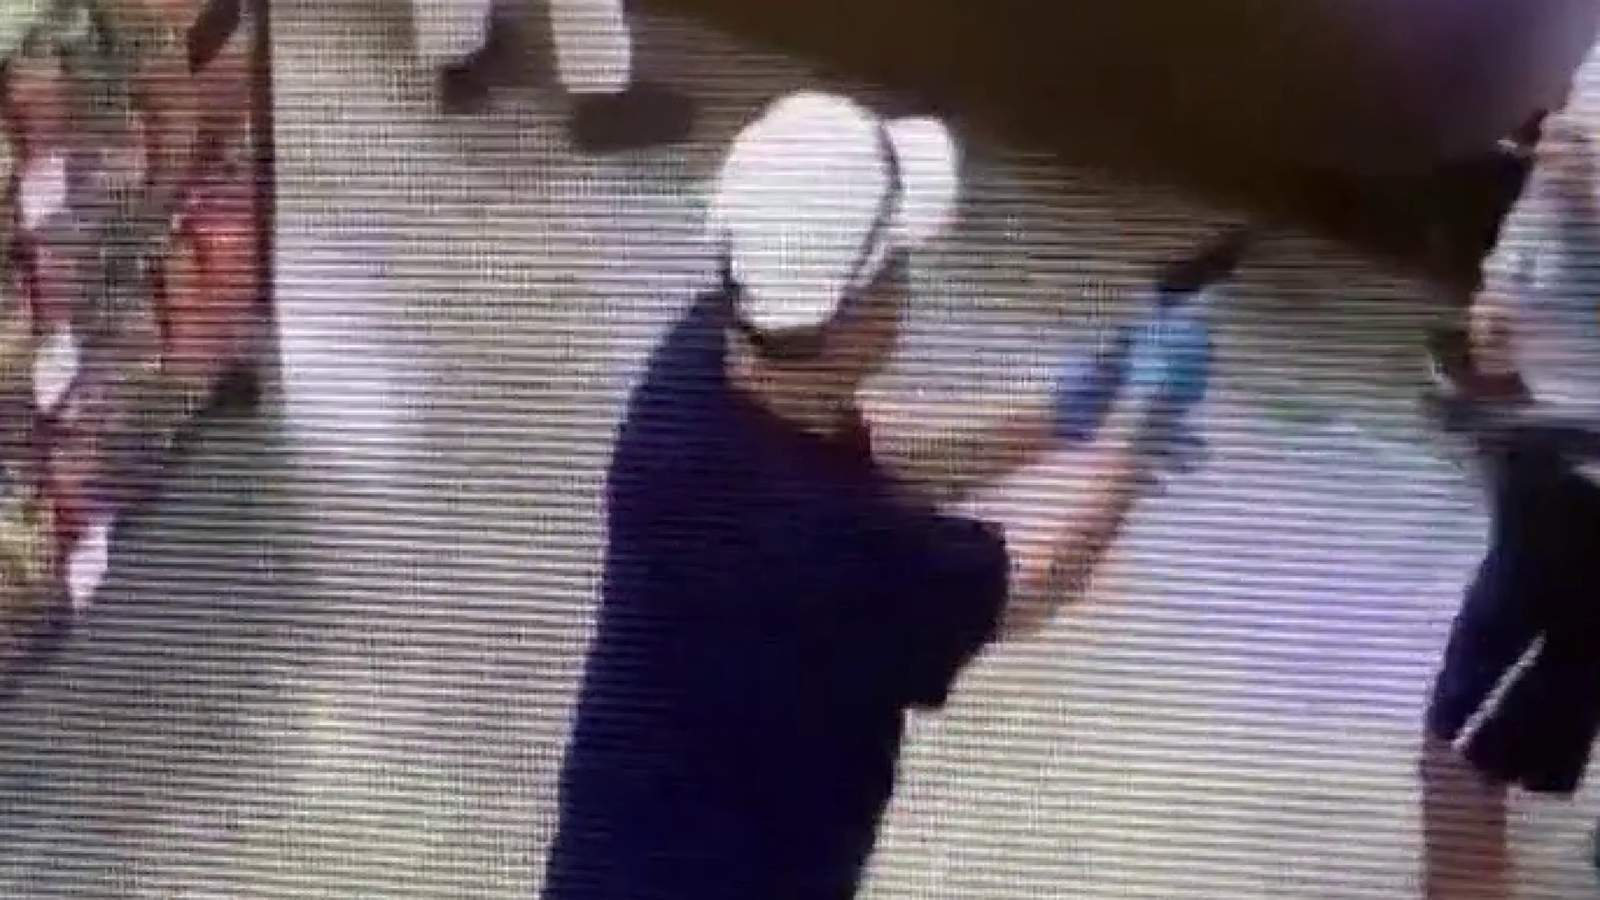 New video shows panic as Publix shopper brandishes gun at deli counter